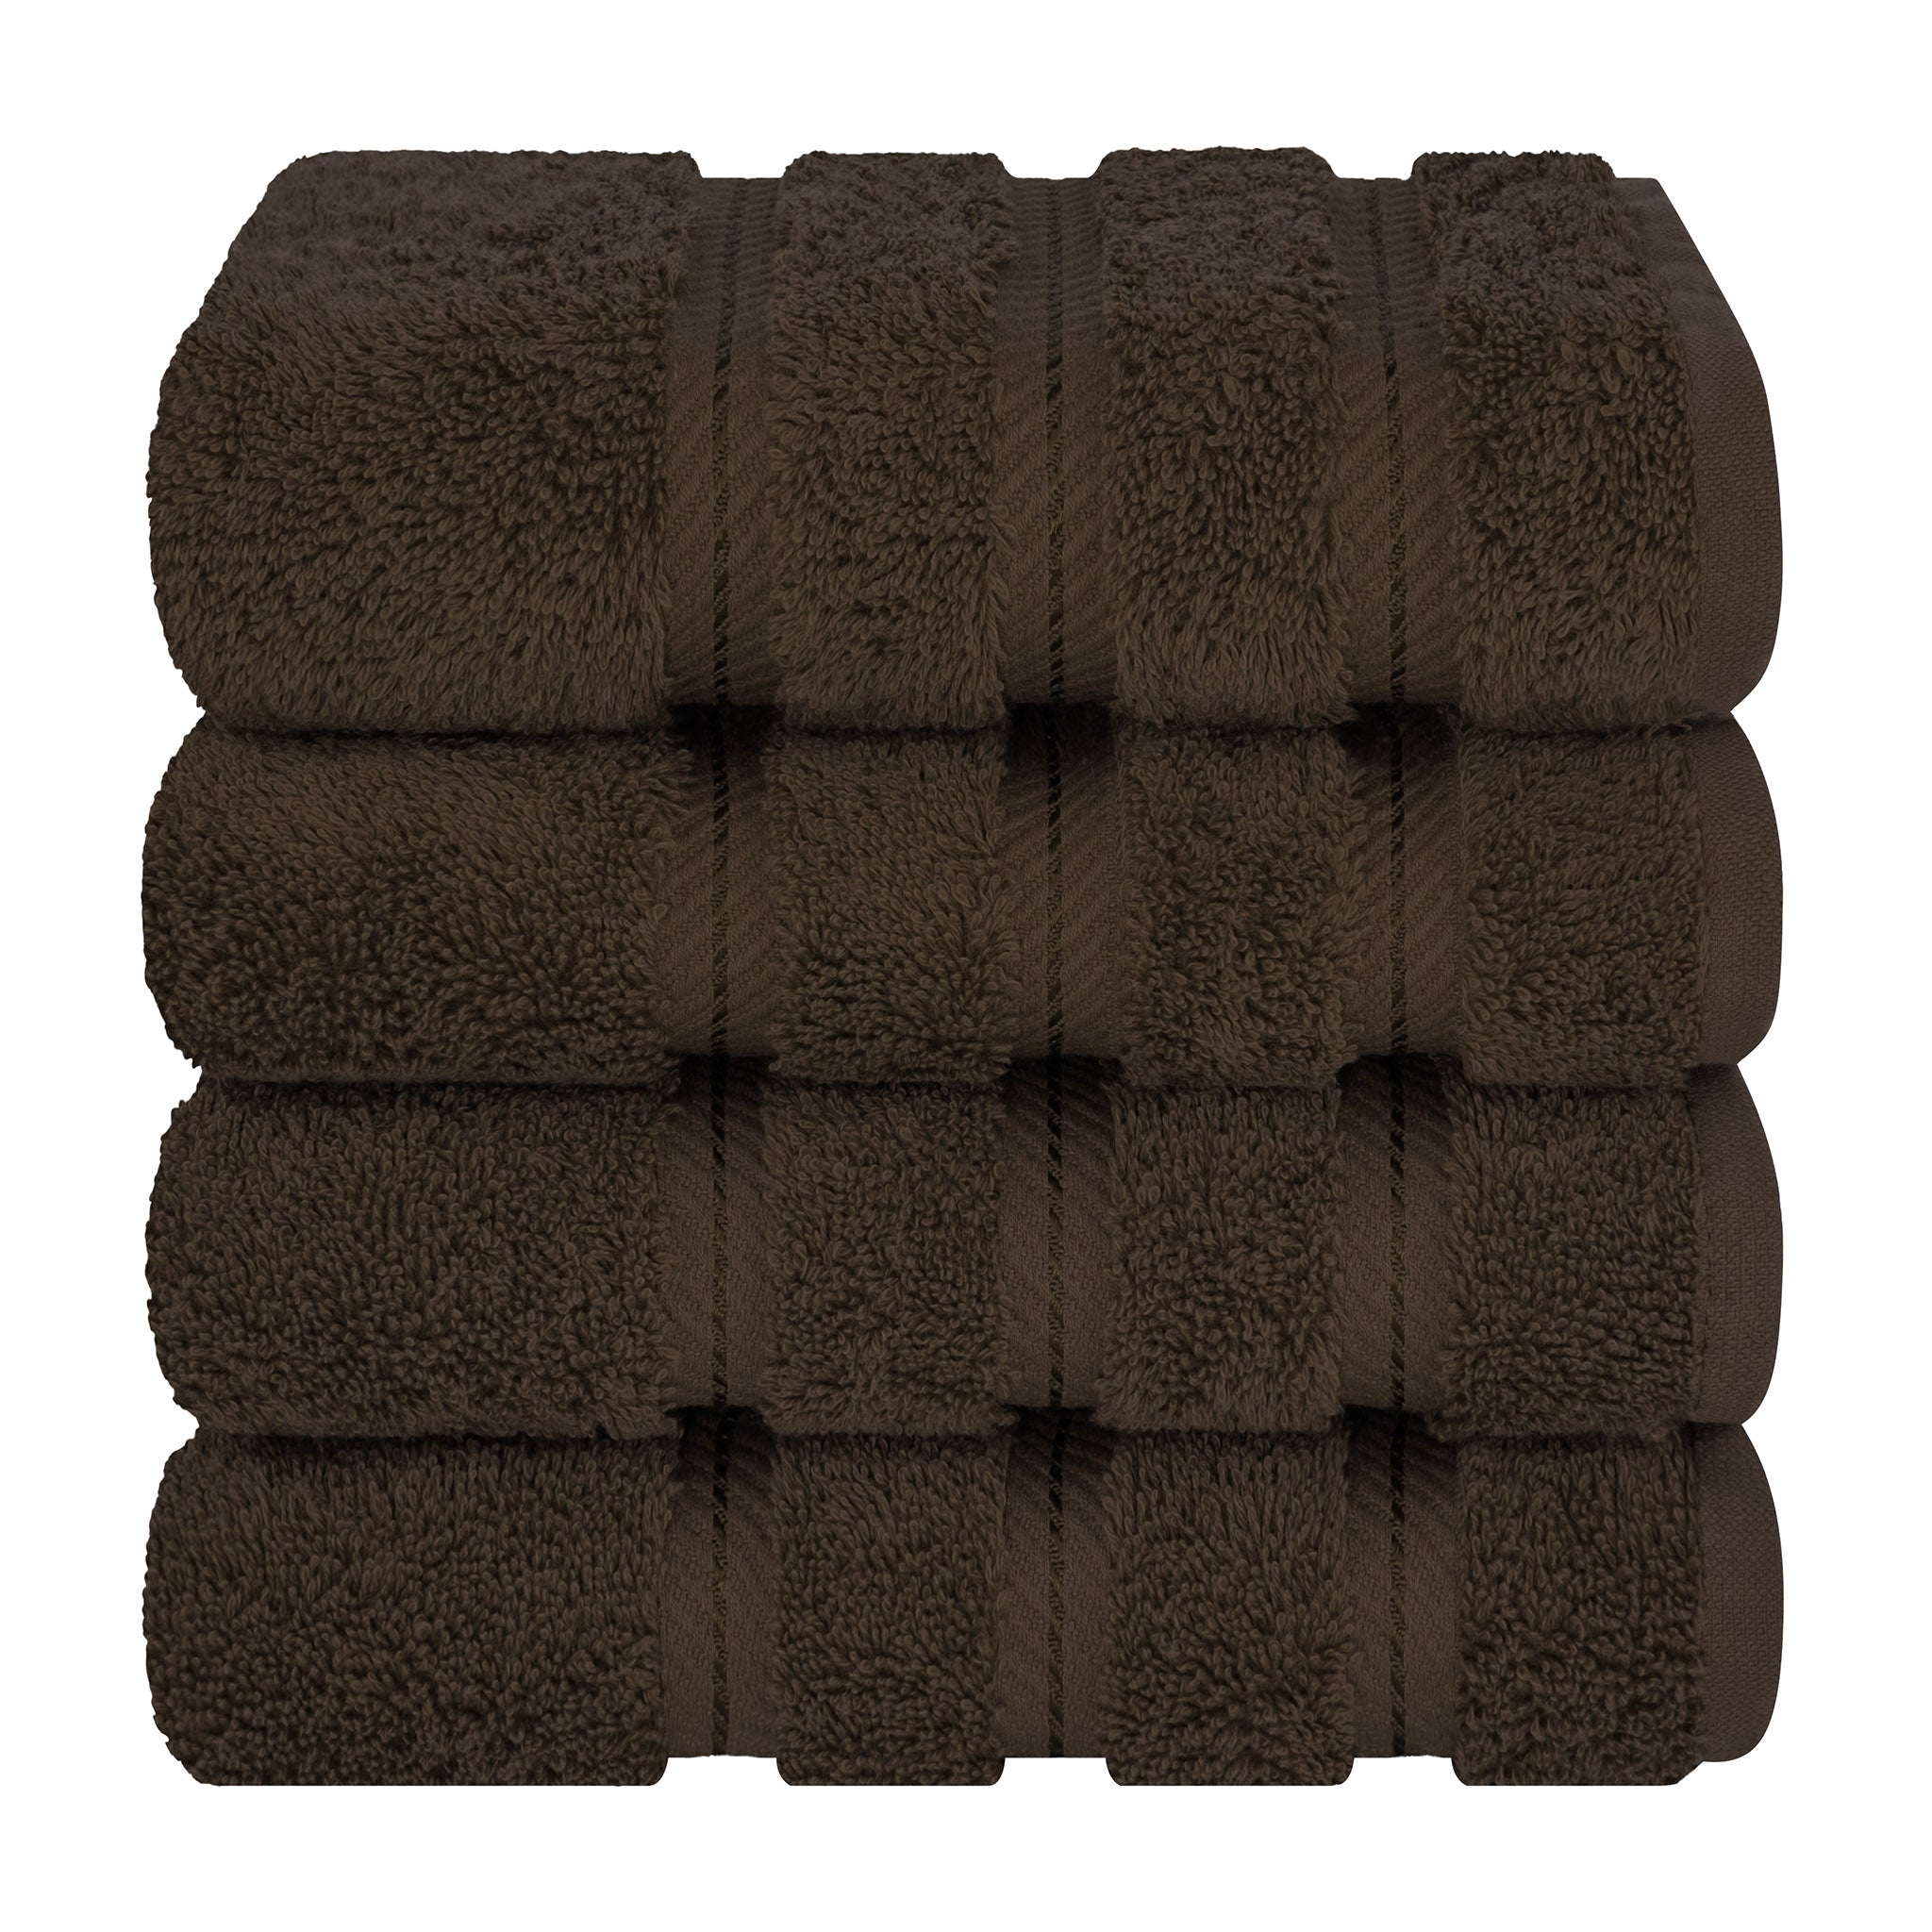  American Soft Linen 100% Turkish Cotton 4 Pack Hand Towel Set  chocolate-brown-7